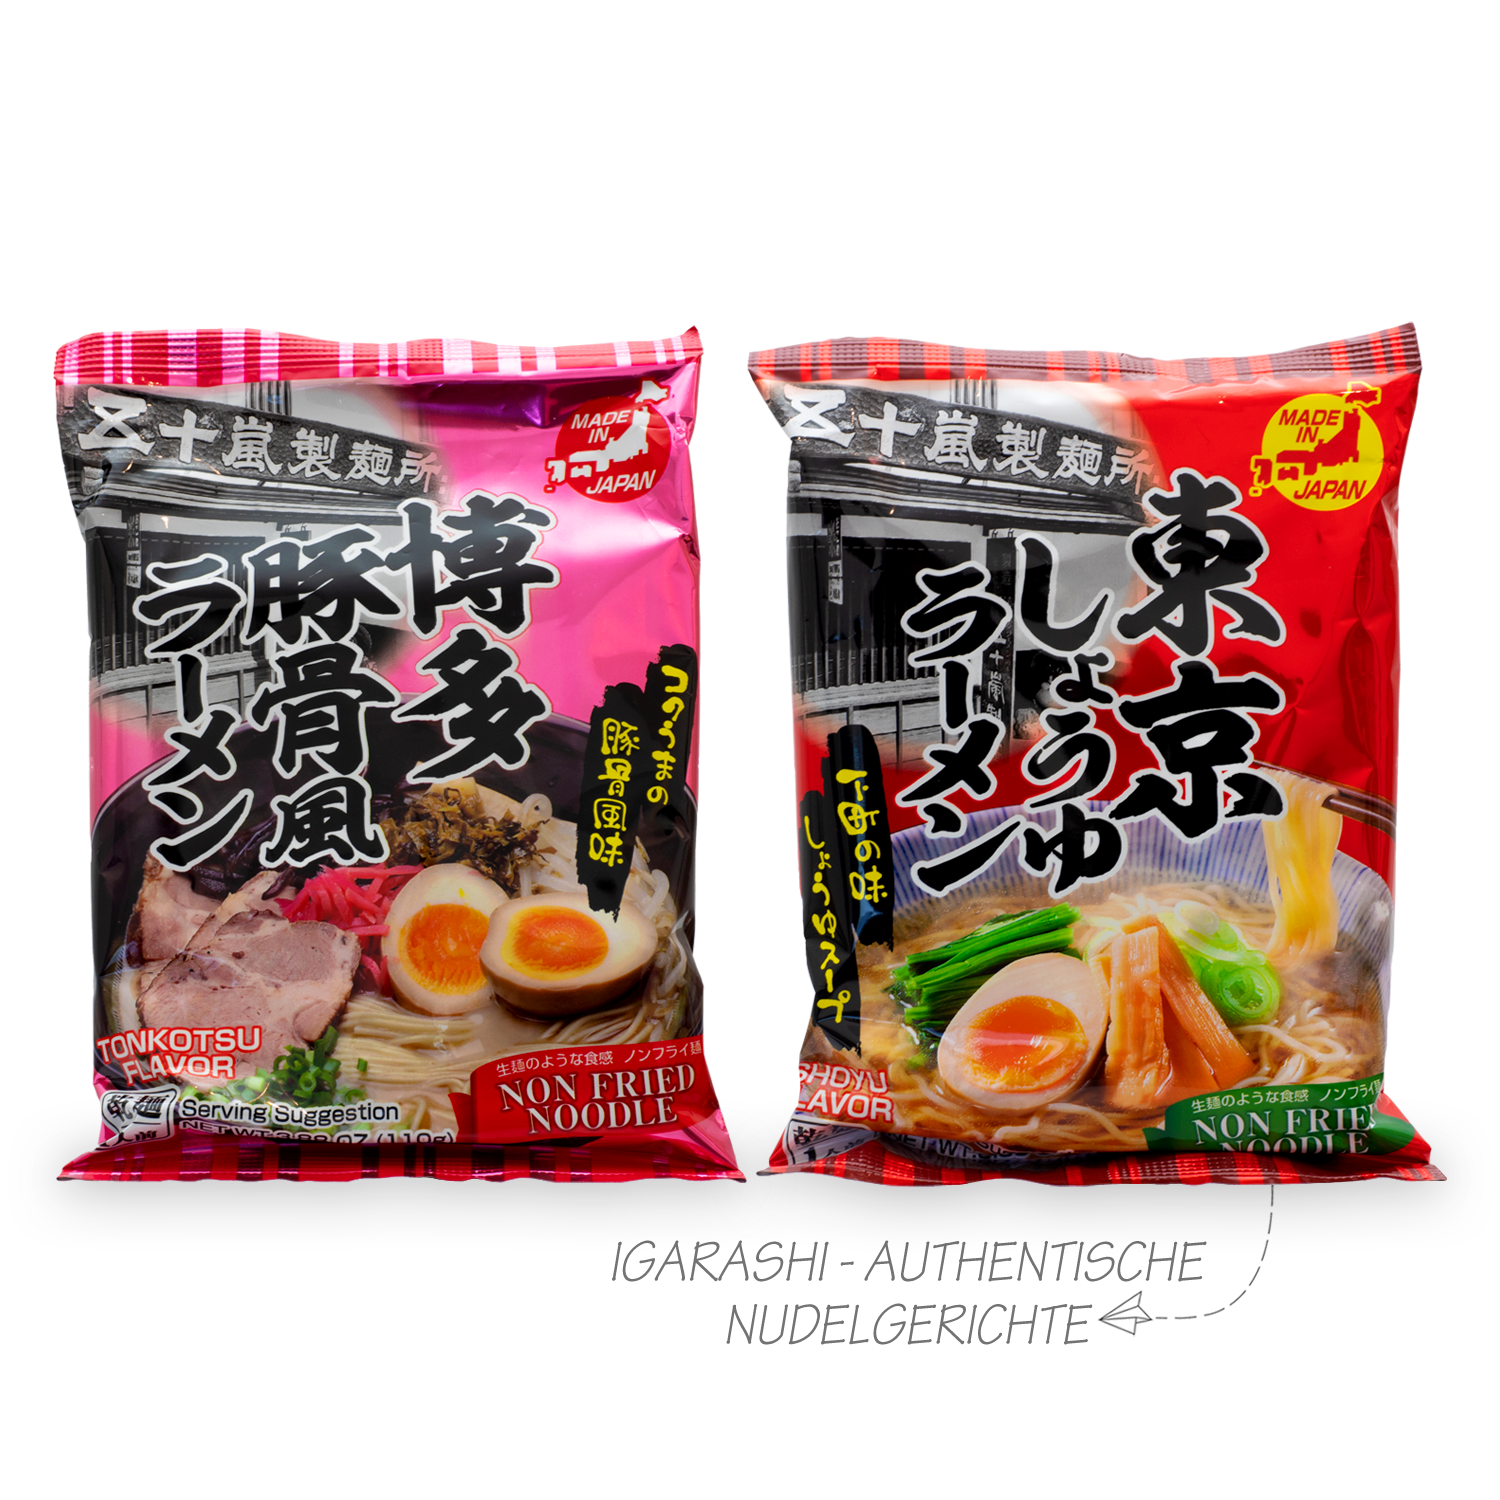 Susuru: surprise box with 10 Japanese instant noodles